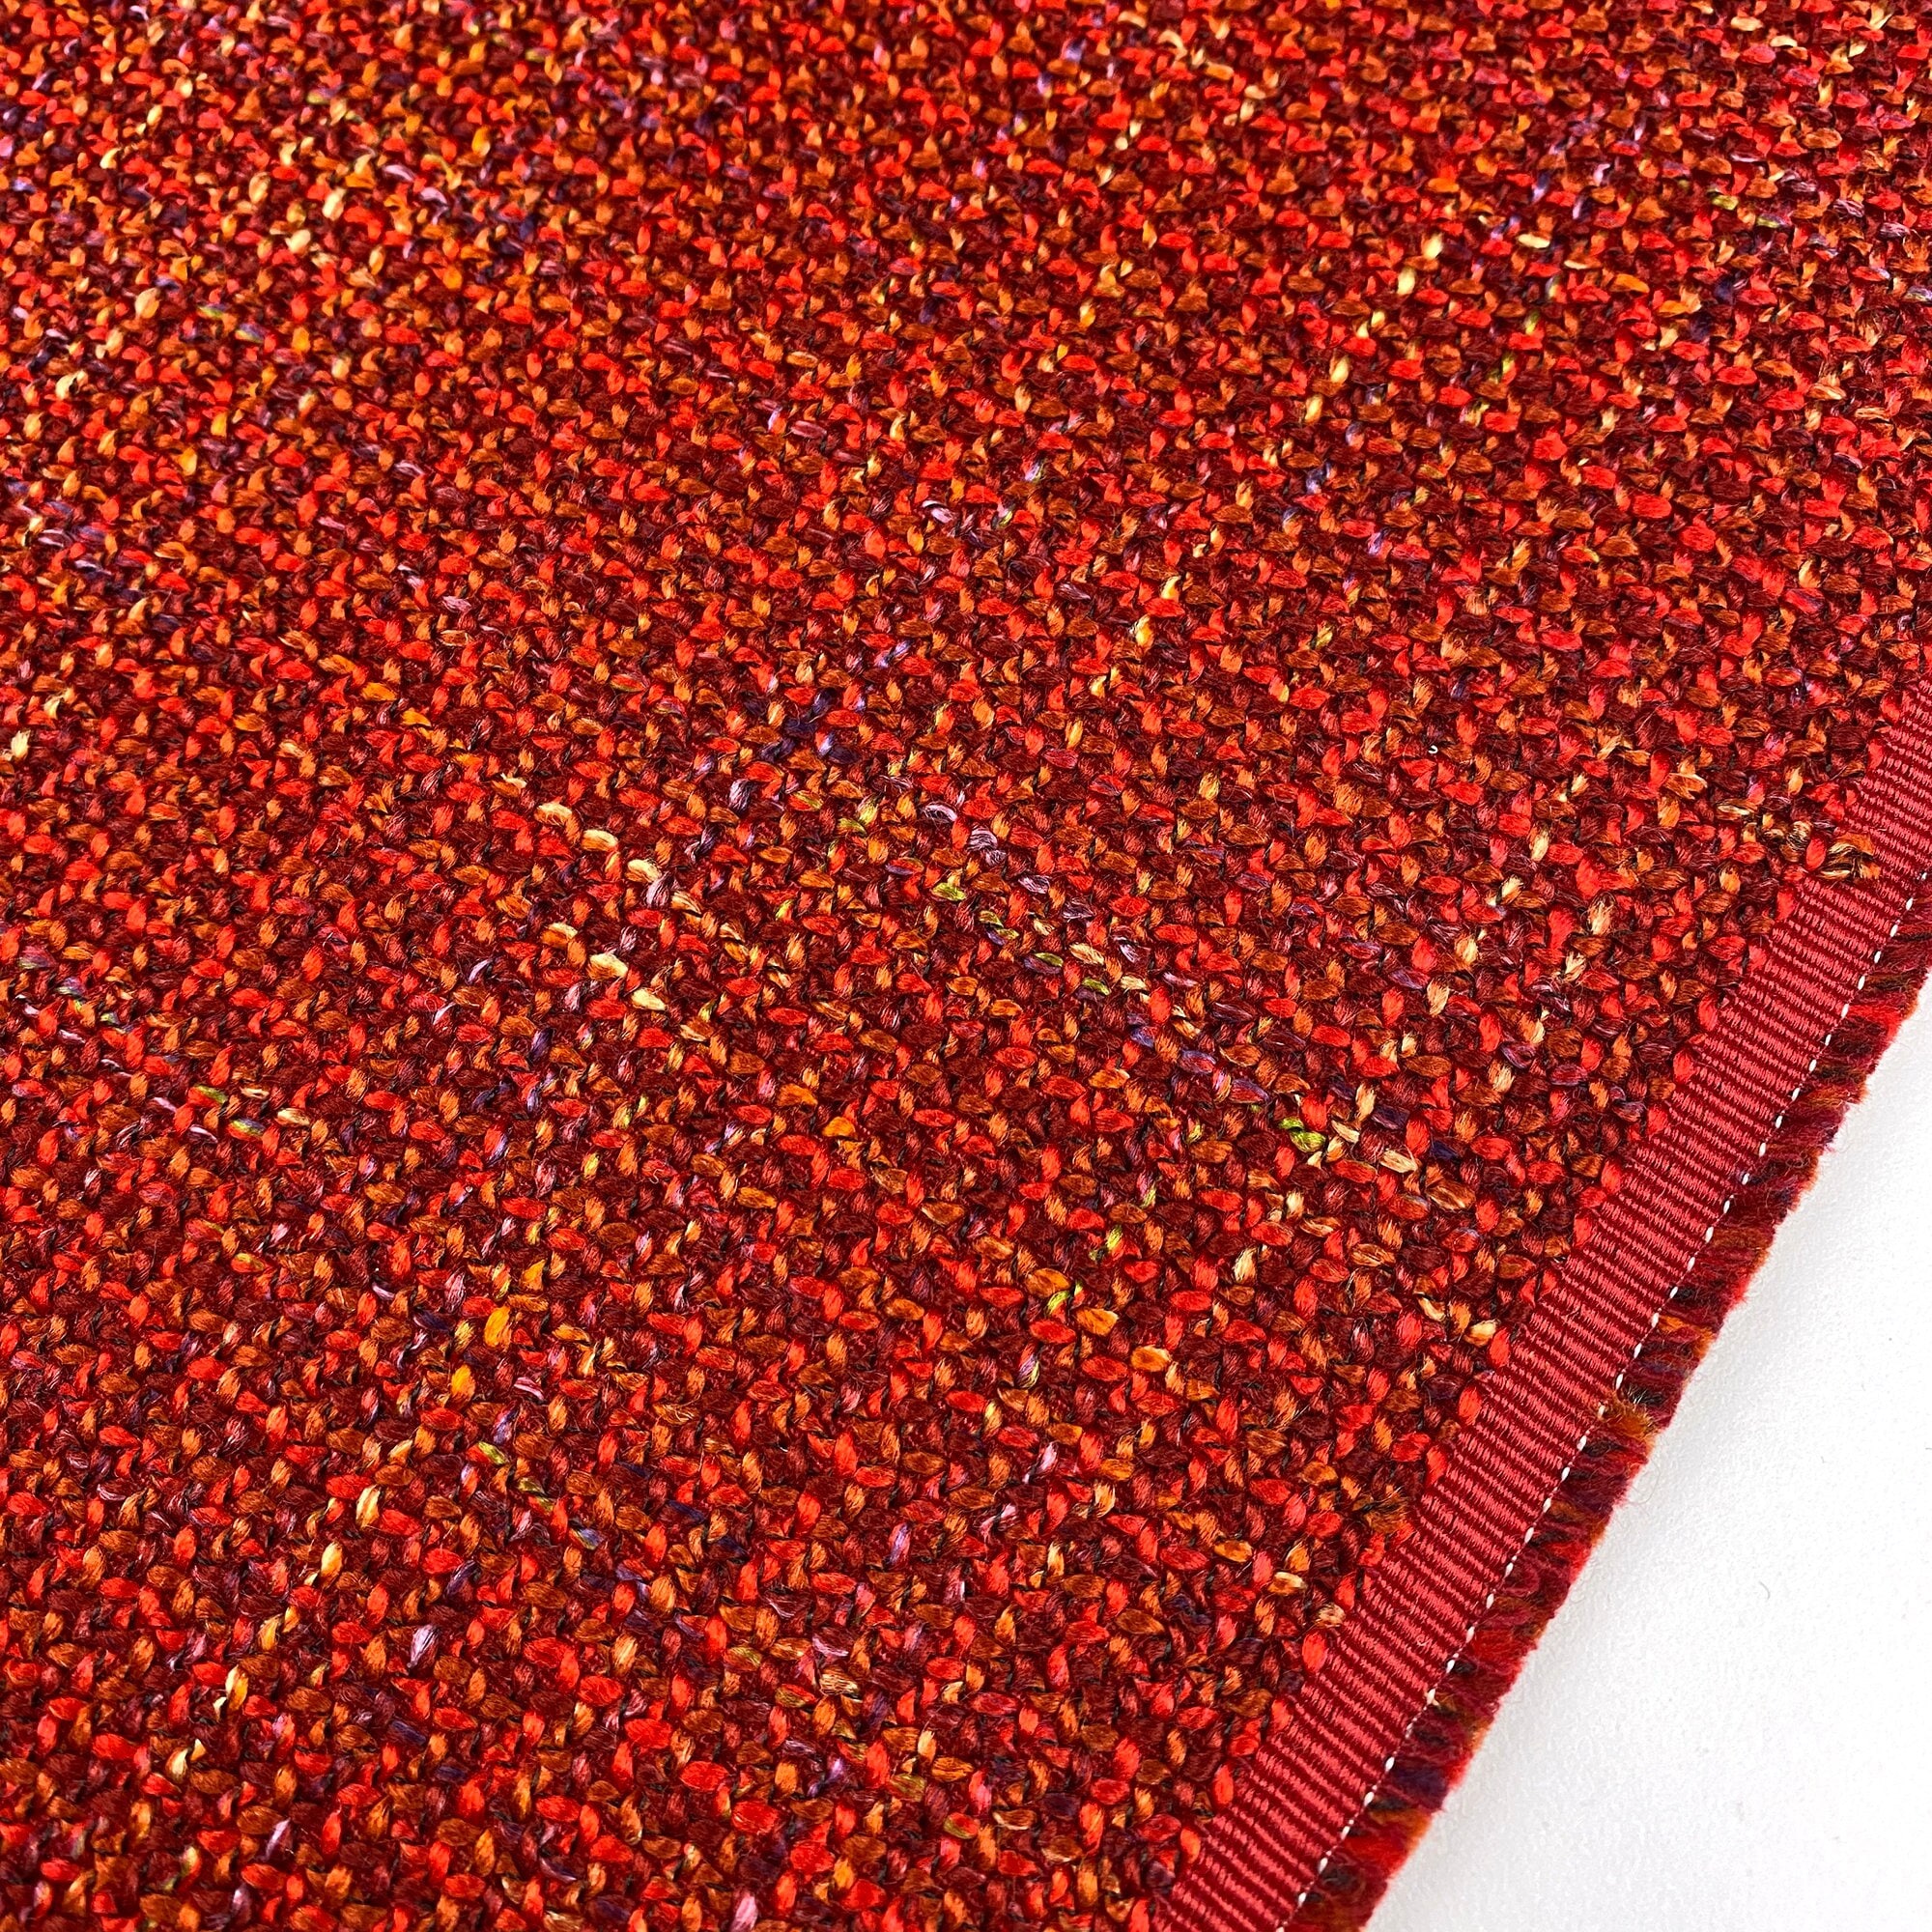 Roter Tweed-Polsterungs-Stoff strukturiertes gewebtes elegantes  Hauptdekor-Vorhang-Kissen-Kopfteil-Sofa-Stuhl-Möbel-Material-Gewebegroße  Lager - .de